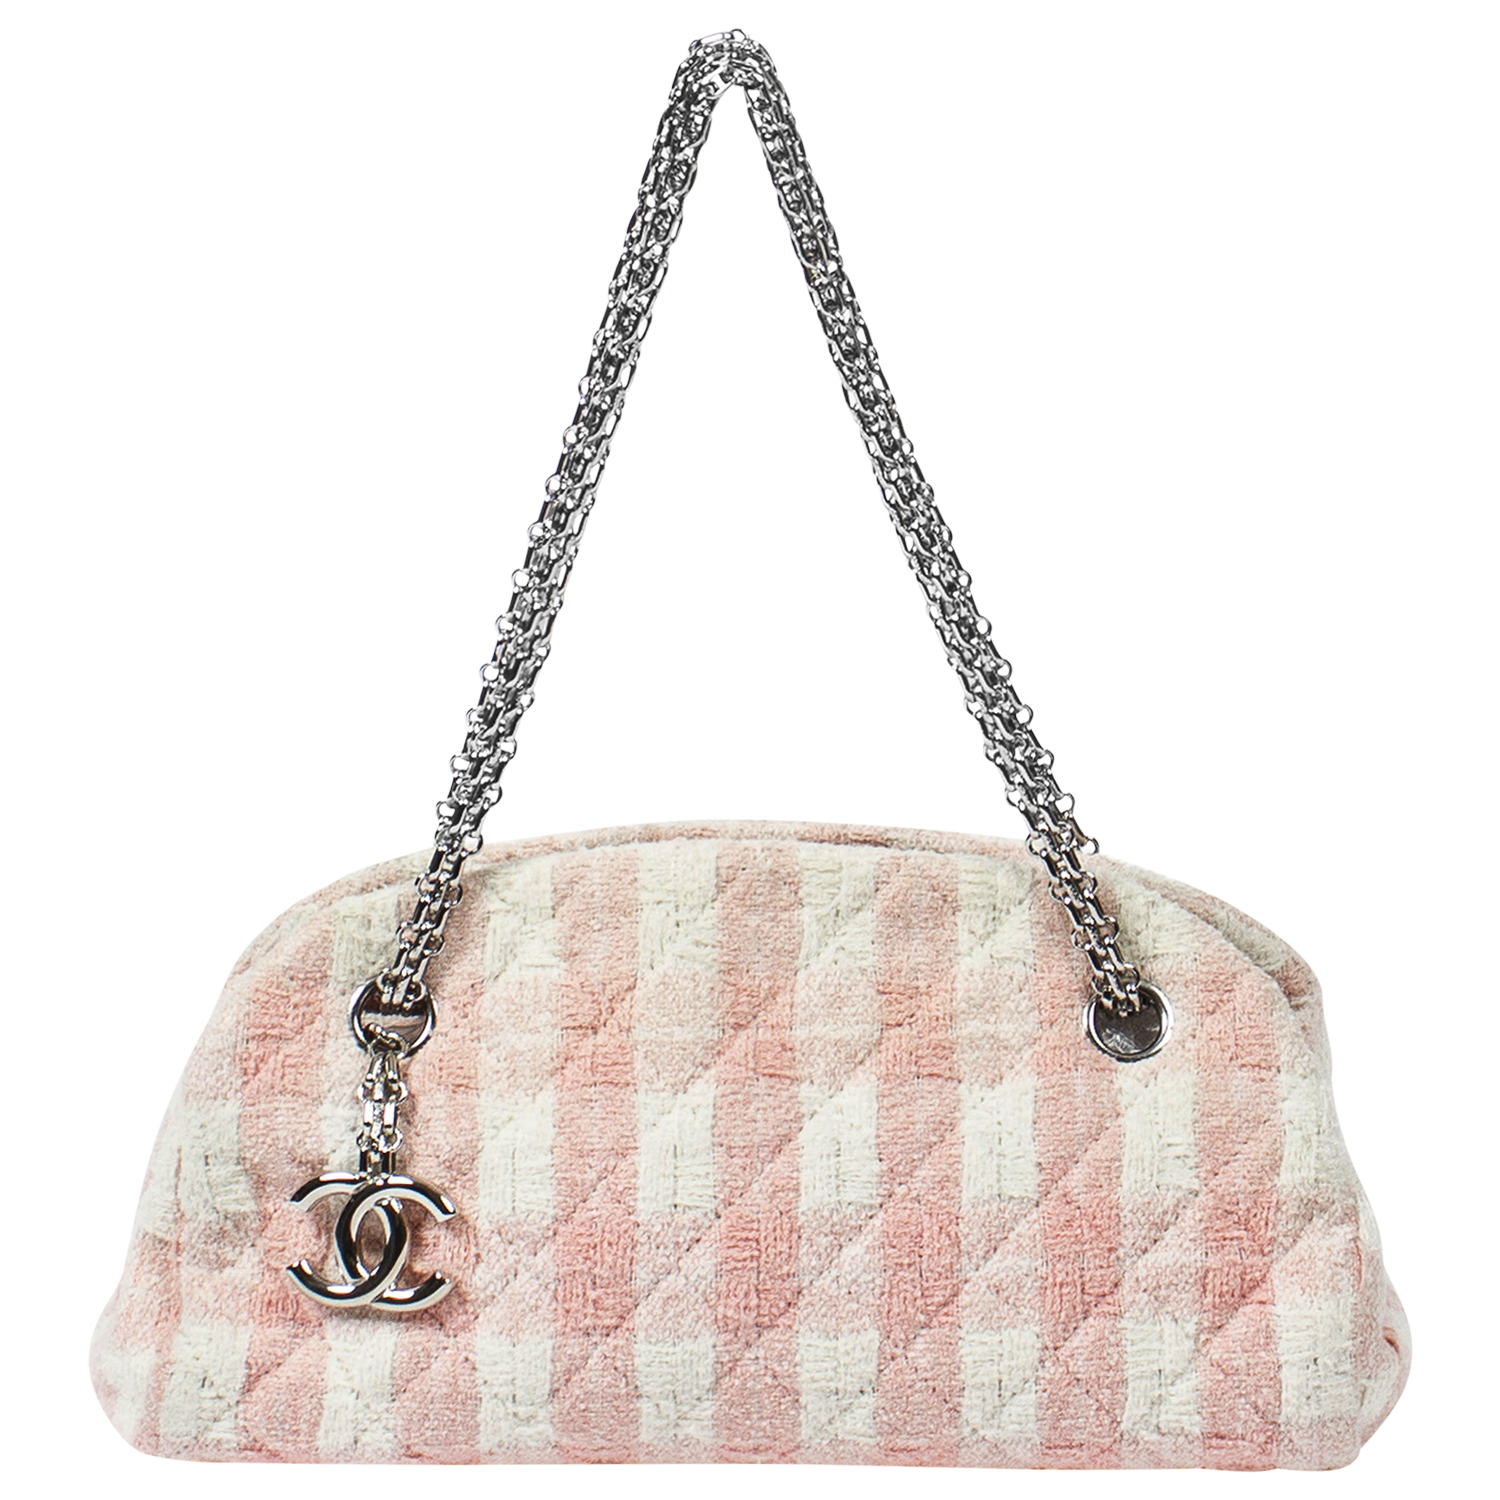 pink chanel tweed bag new